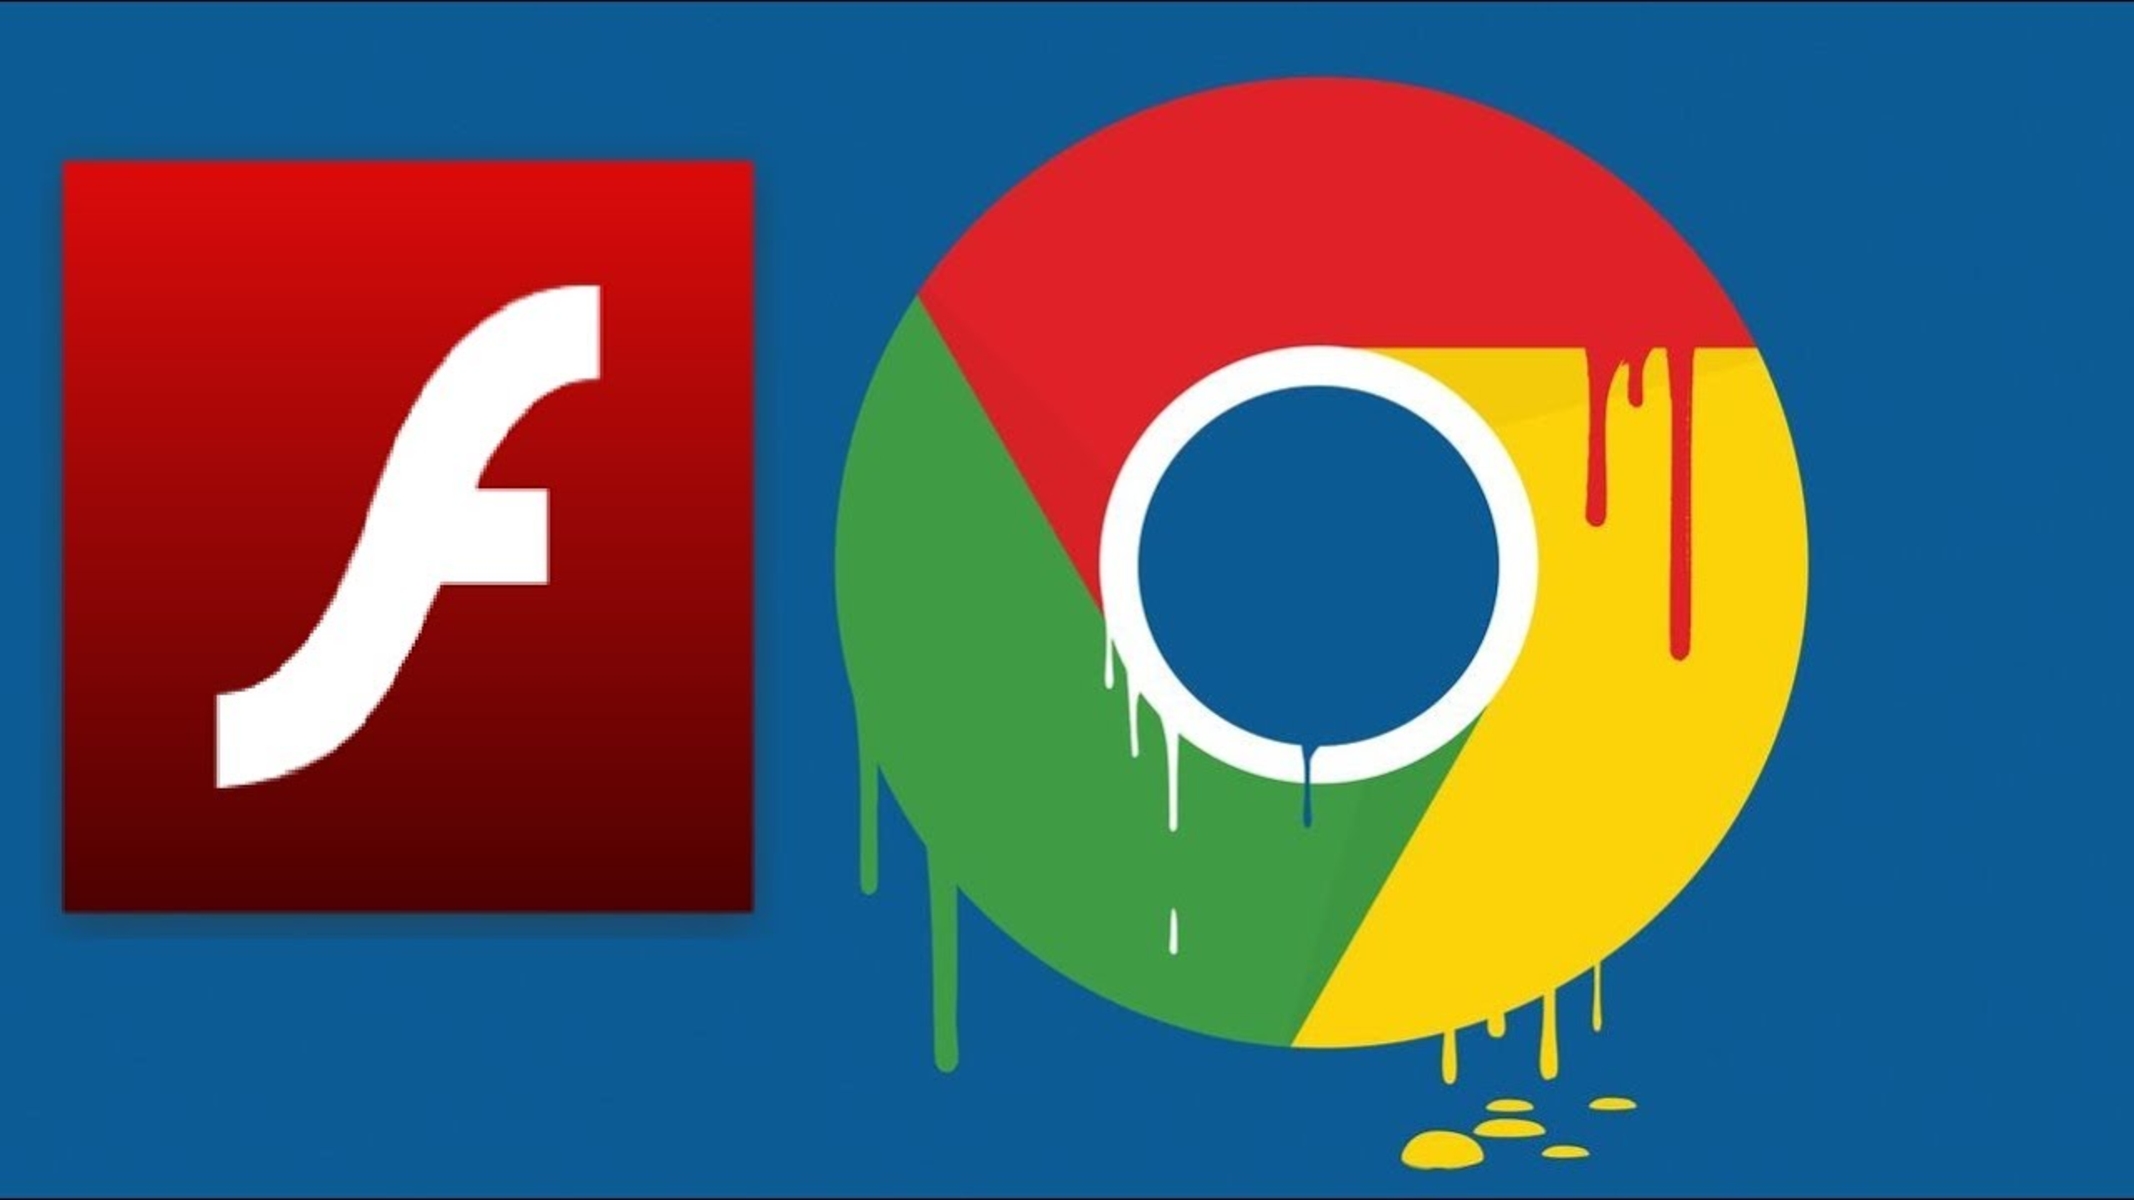 How Do I Get Adobe Flash Player To Work On Google Chrome?